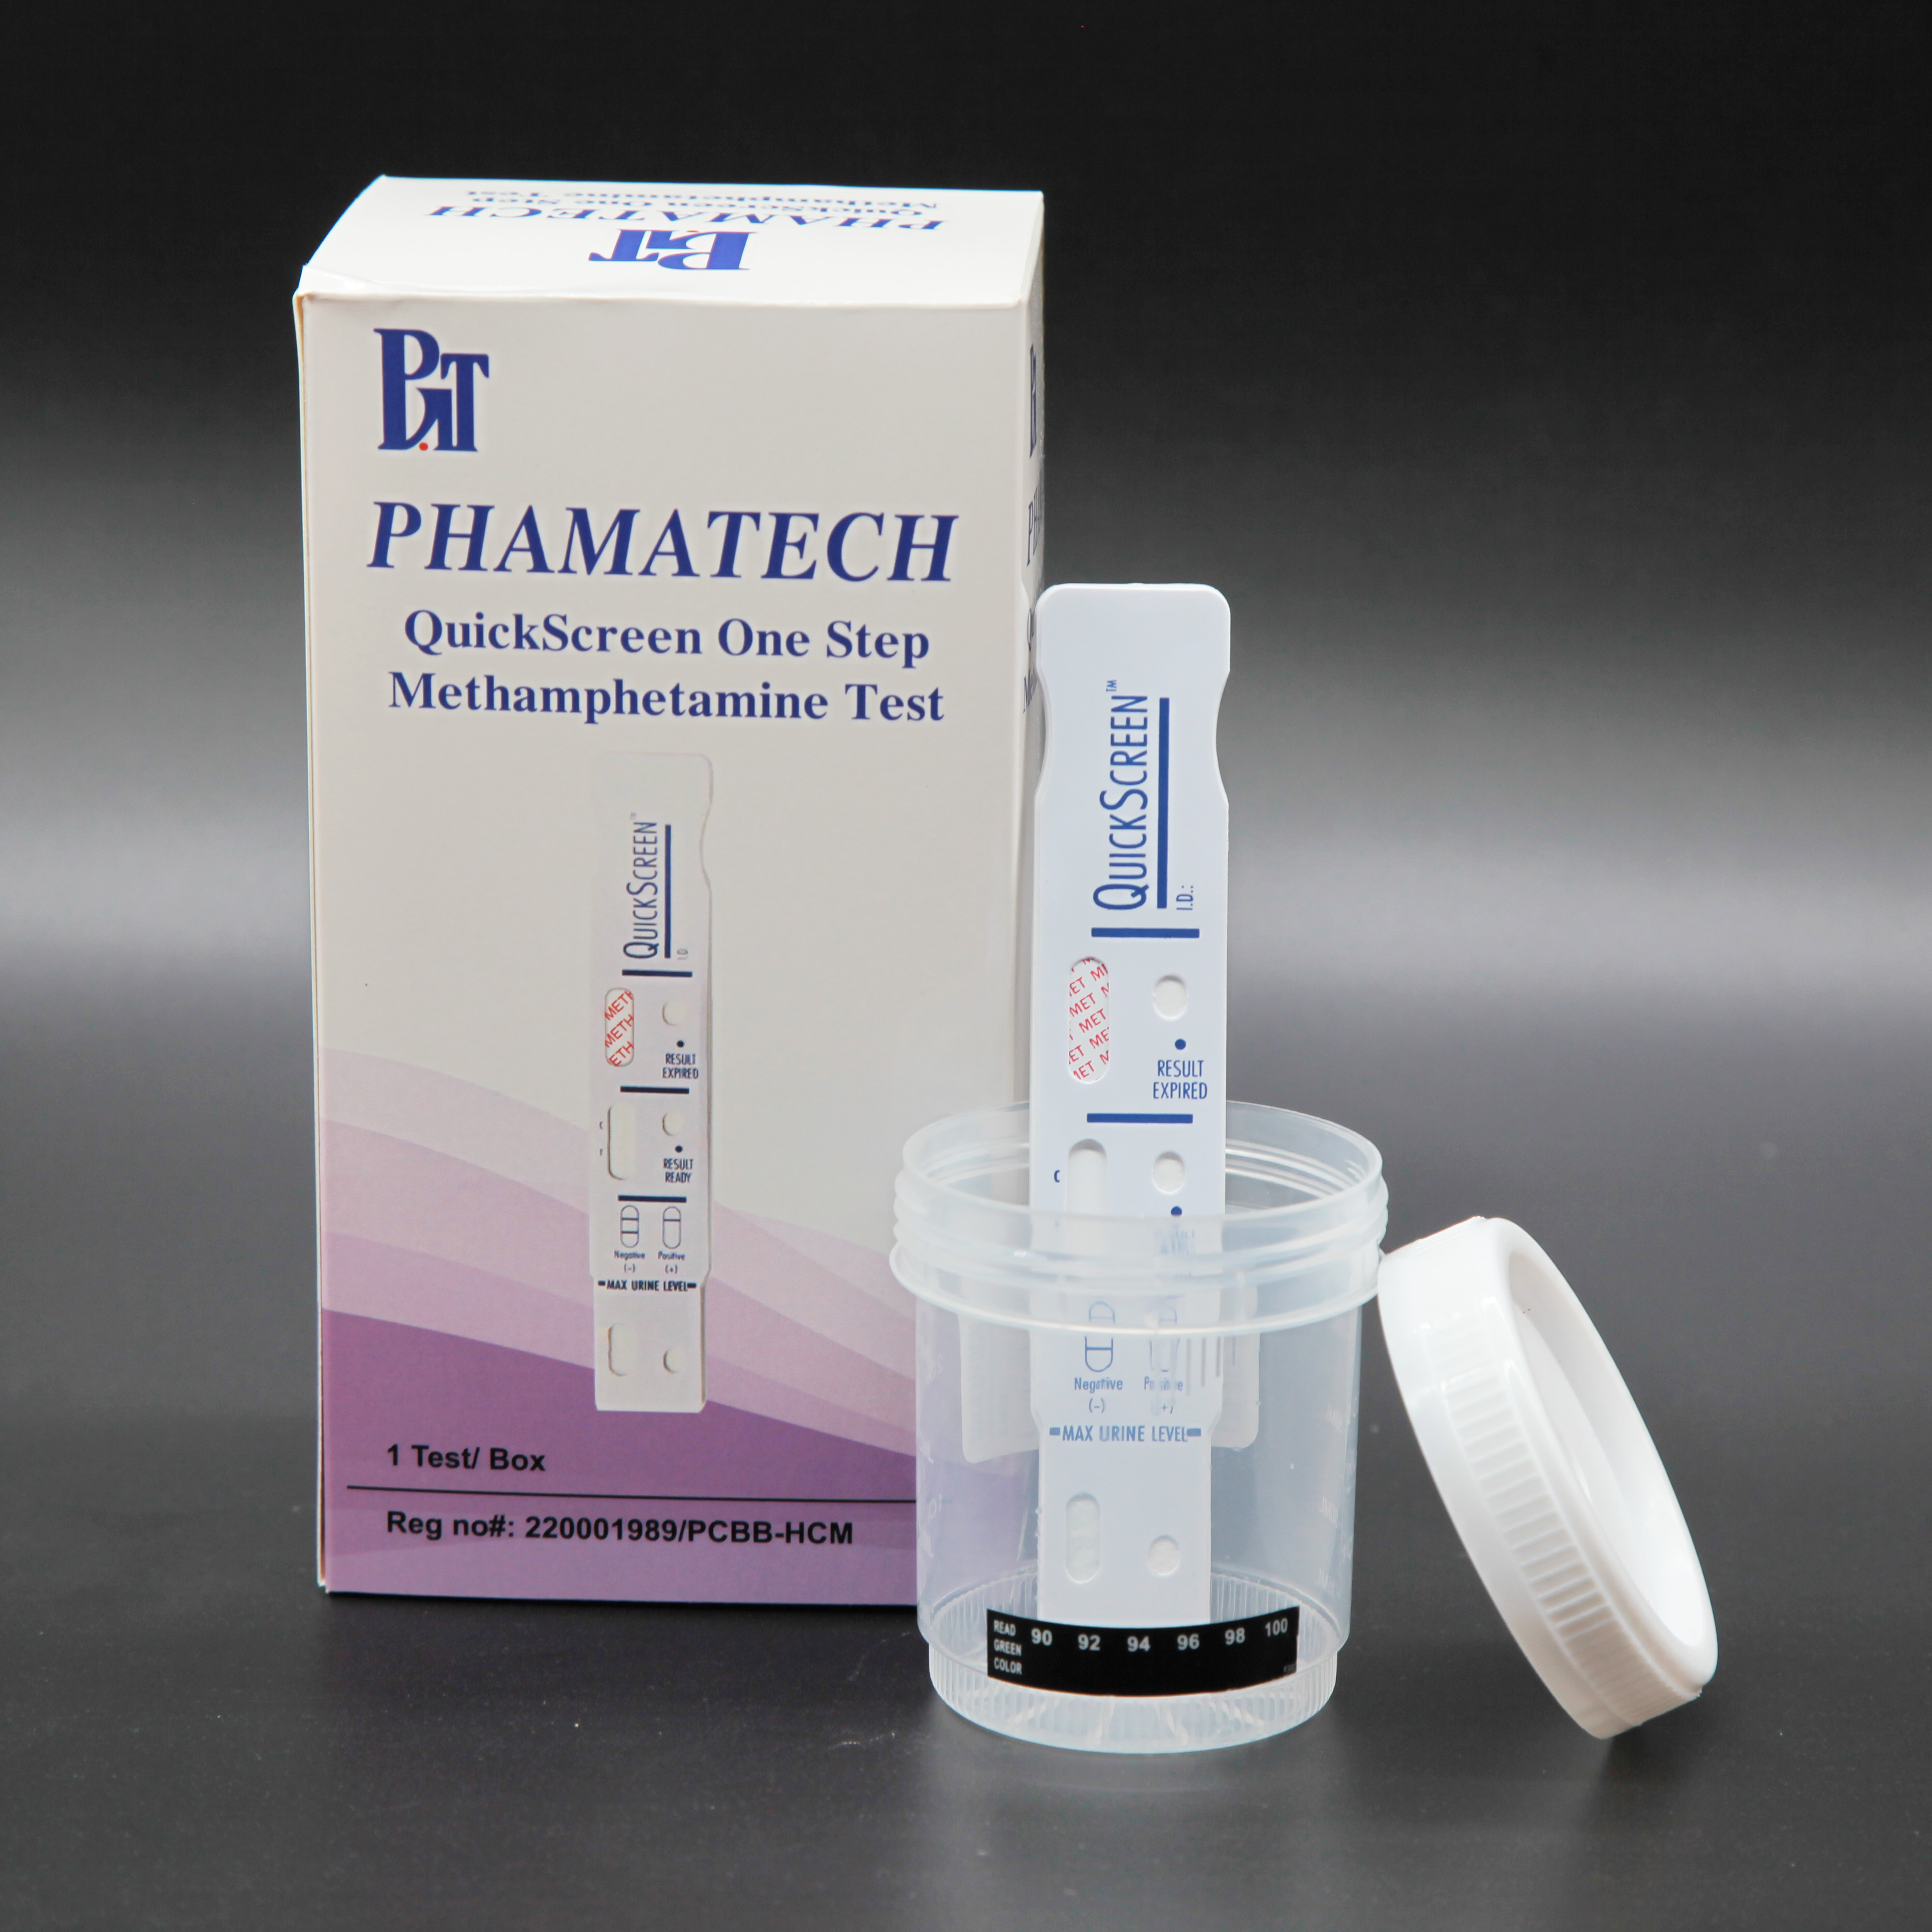 Phát hiện nhanh chất gây nghiện Methamphetamine - Phamatech QuickScreen One Step Methamphetamine Test